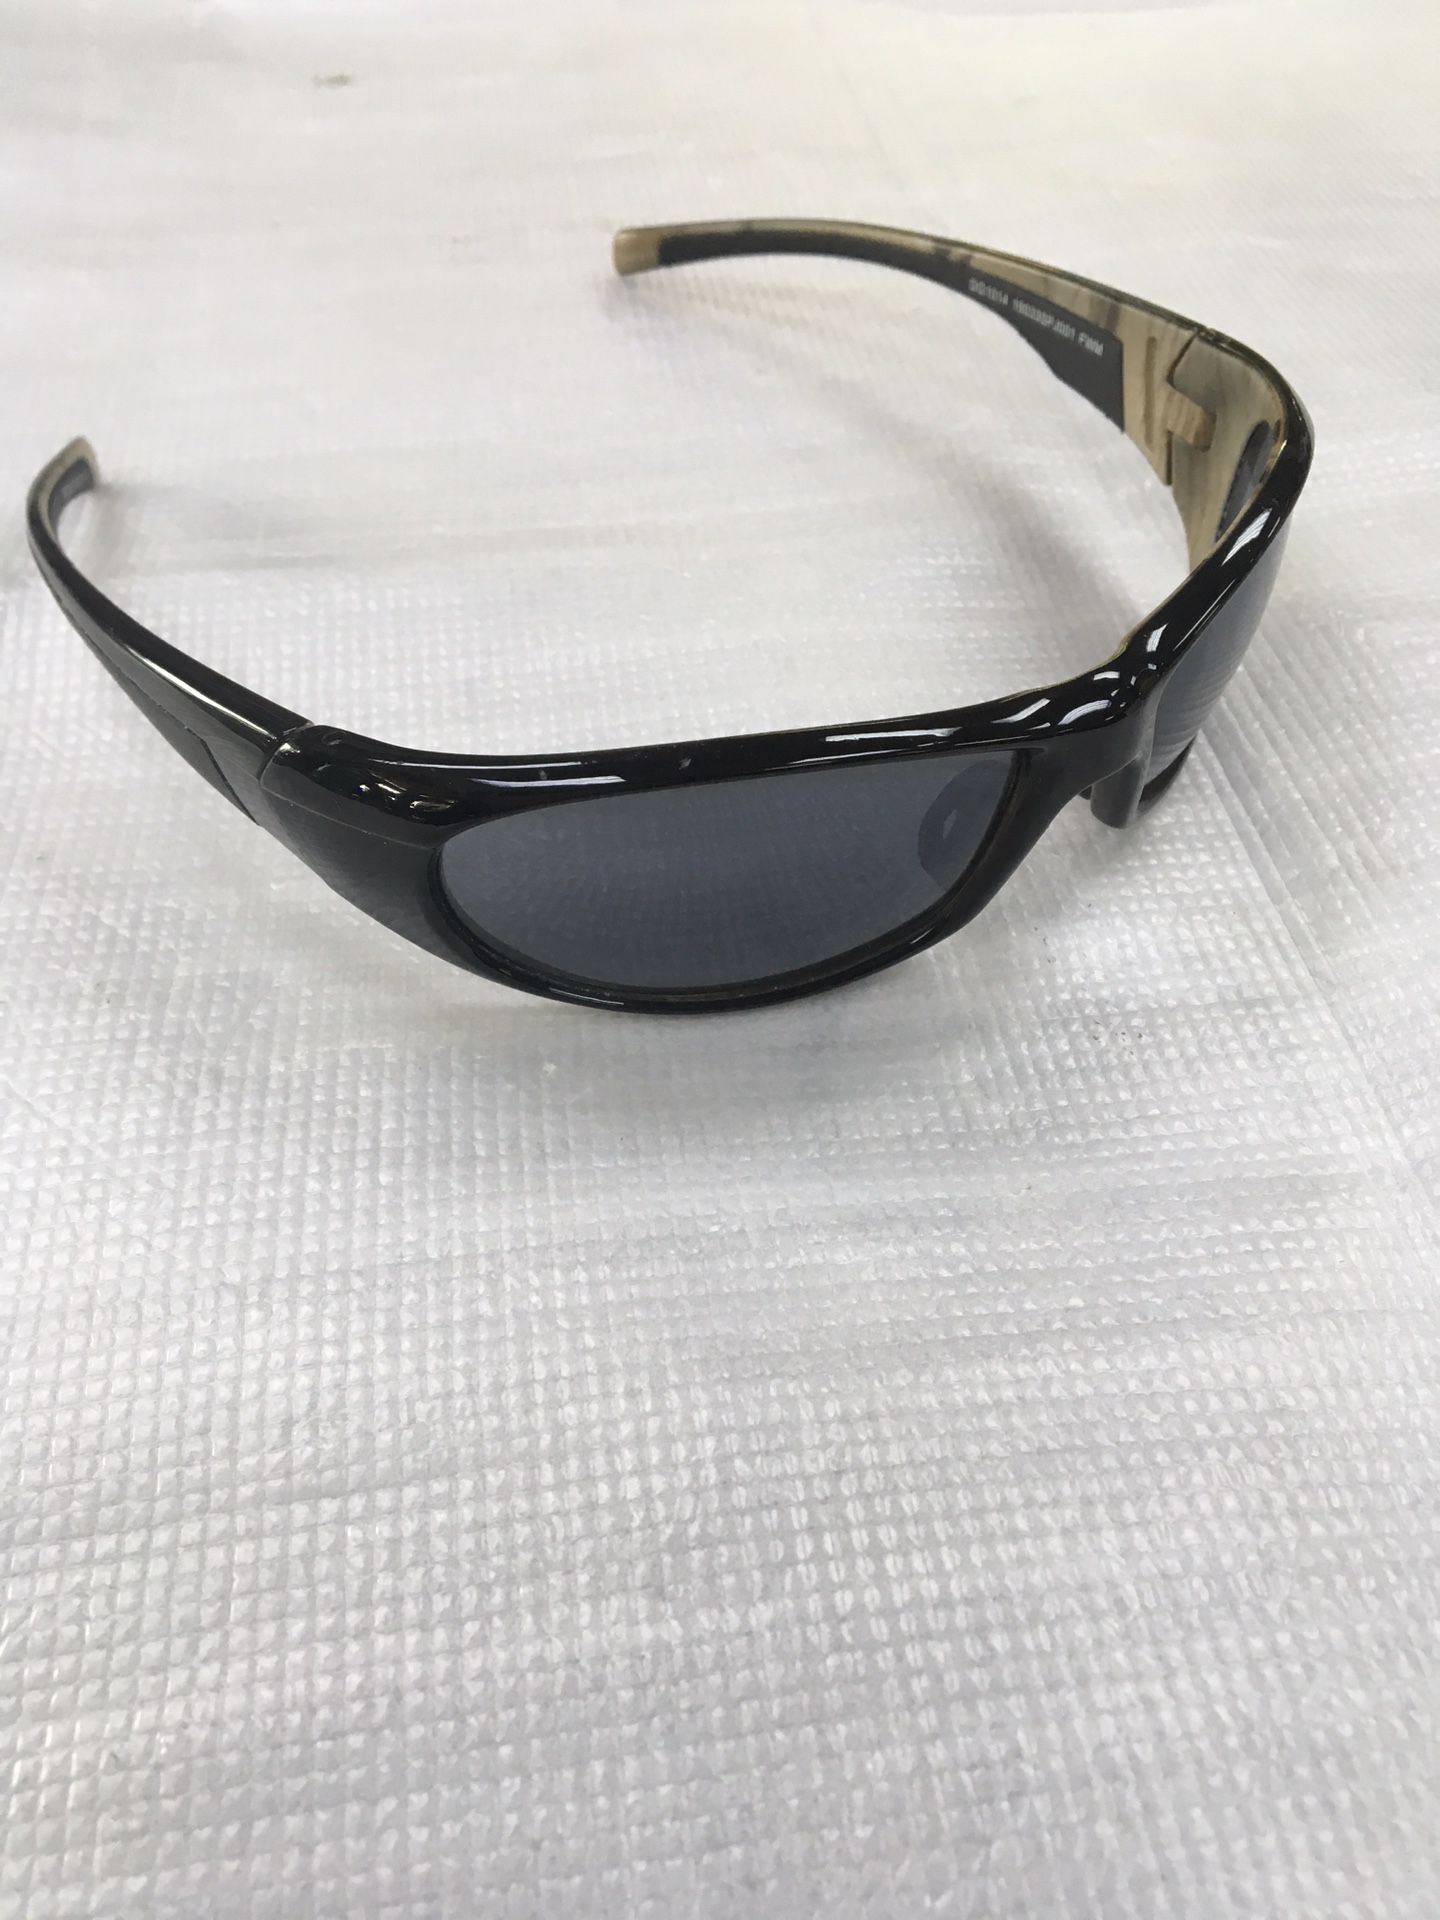 Panama Jack Black, Camouflage Sunglasses - Model DG1014 16033SP J001 FWM  Lightweight for Sale in North Palm Beach, FL - OfferUp